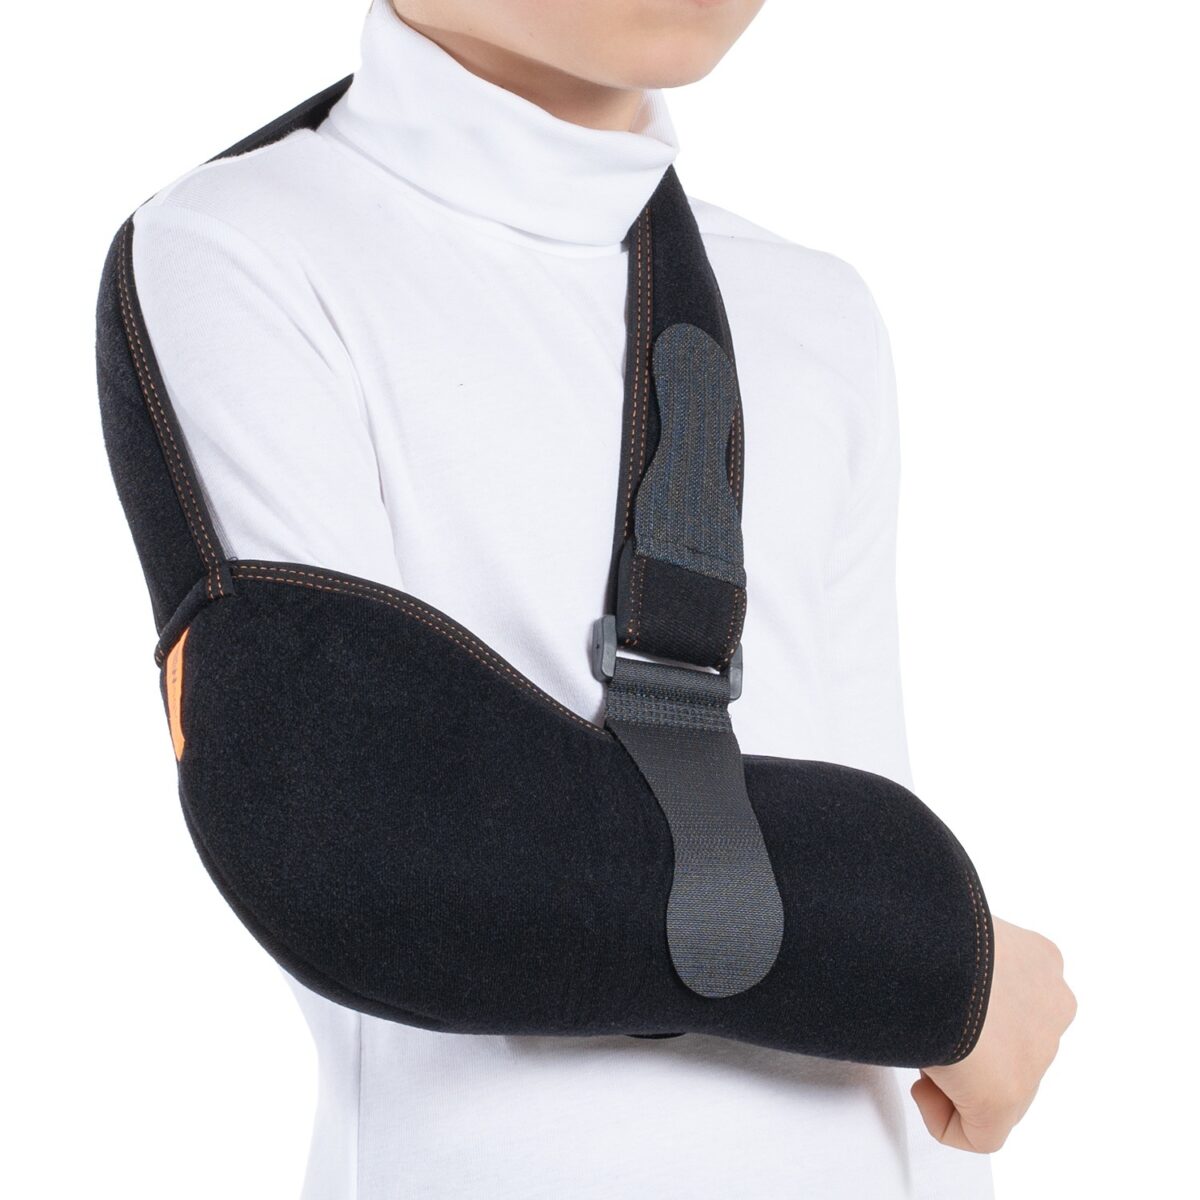 wingmed orthopedic equipments W912 arm sling lux 09